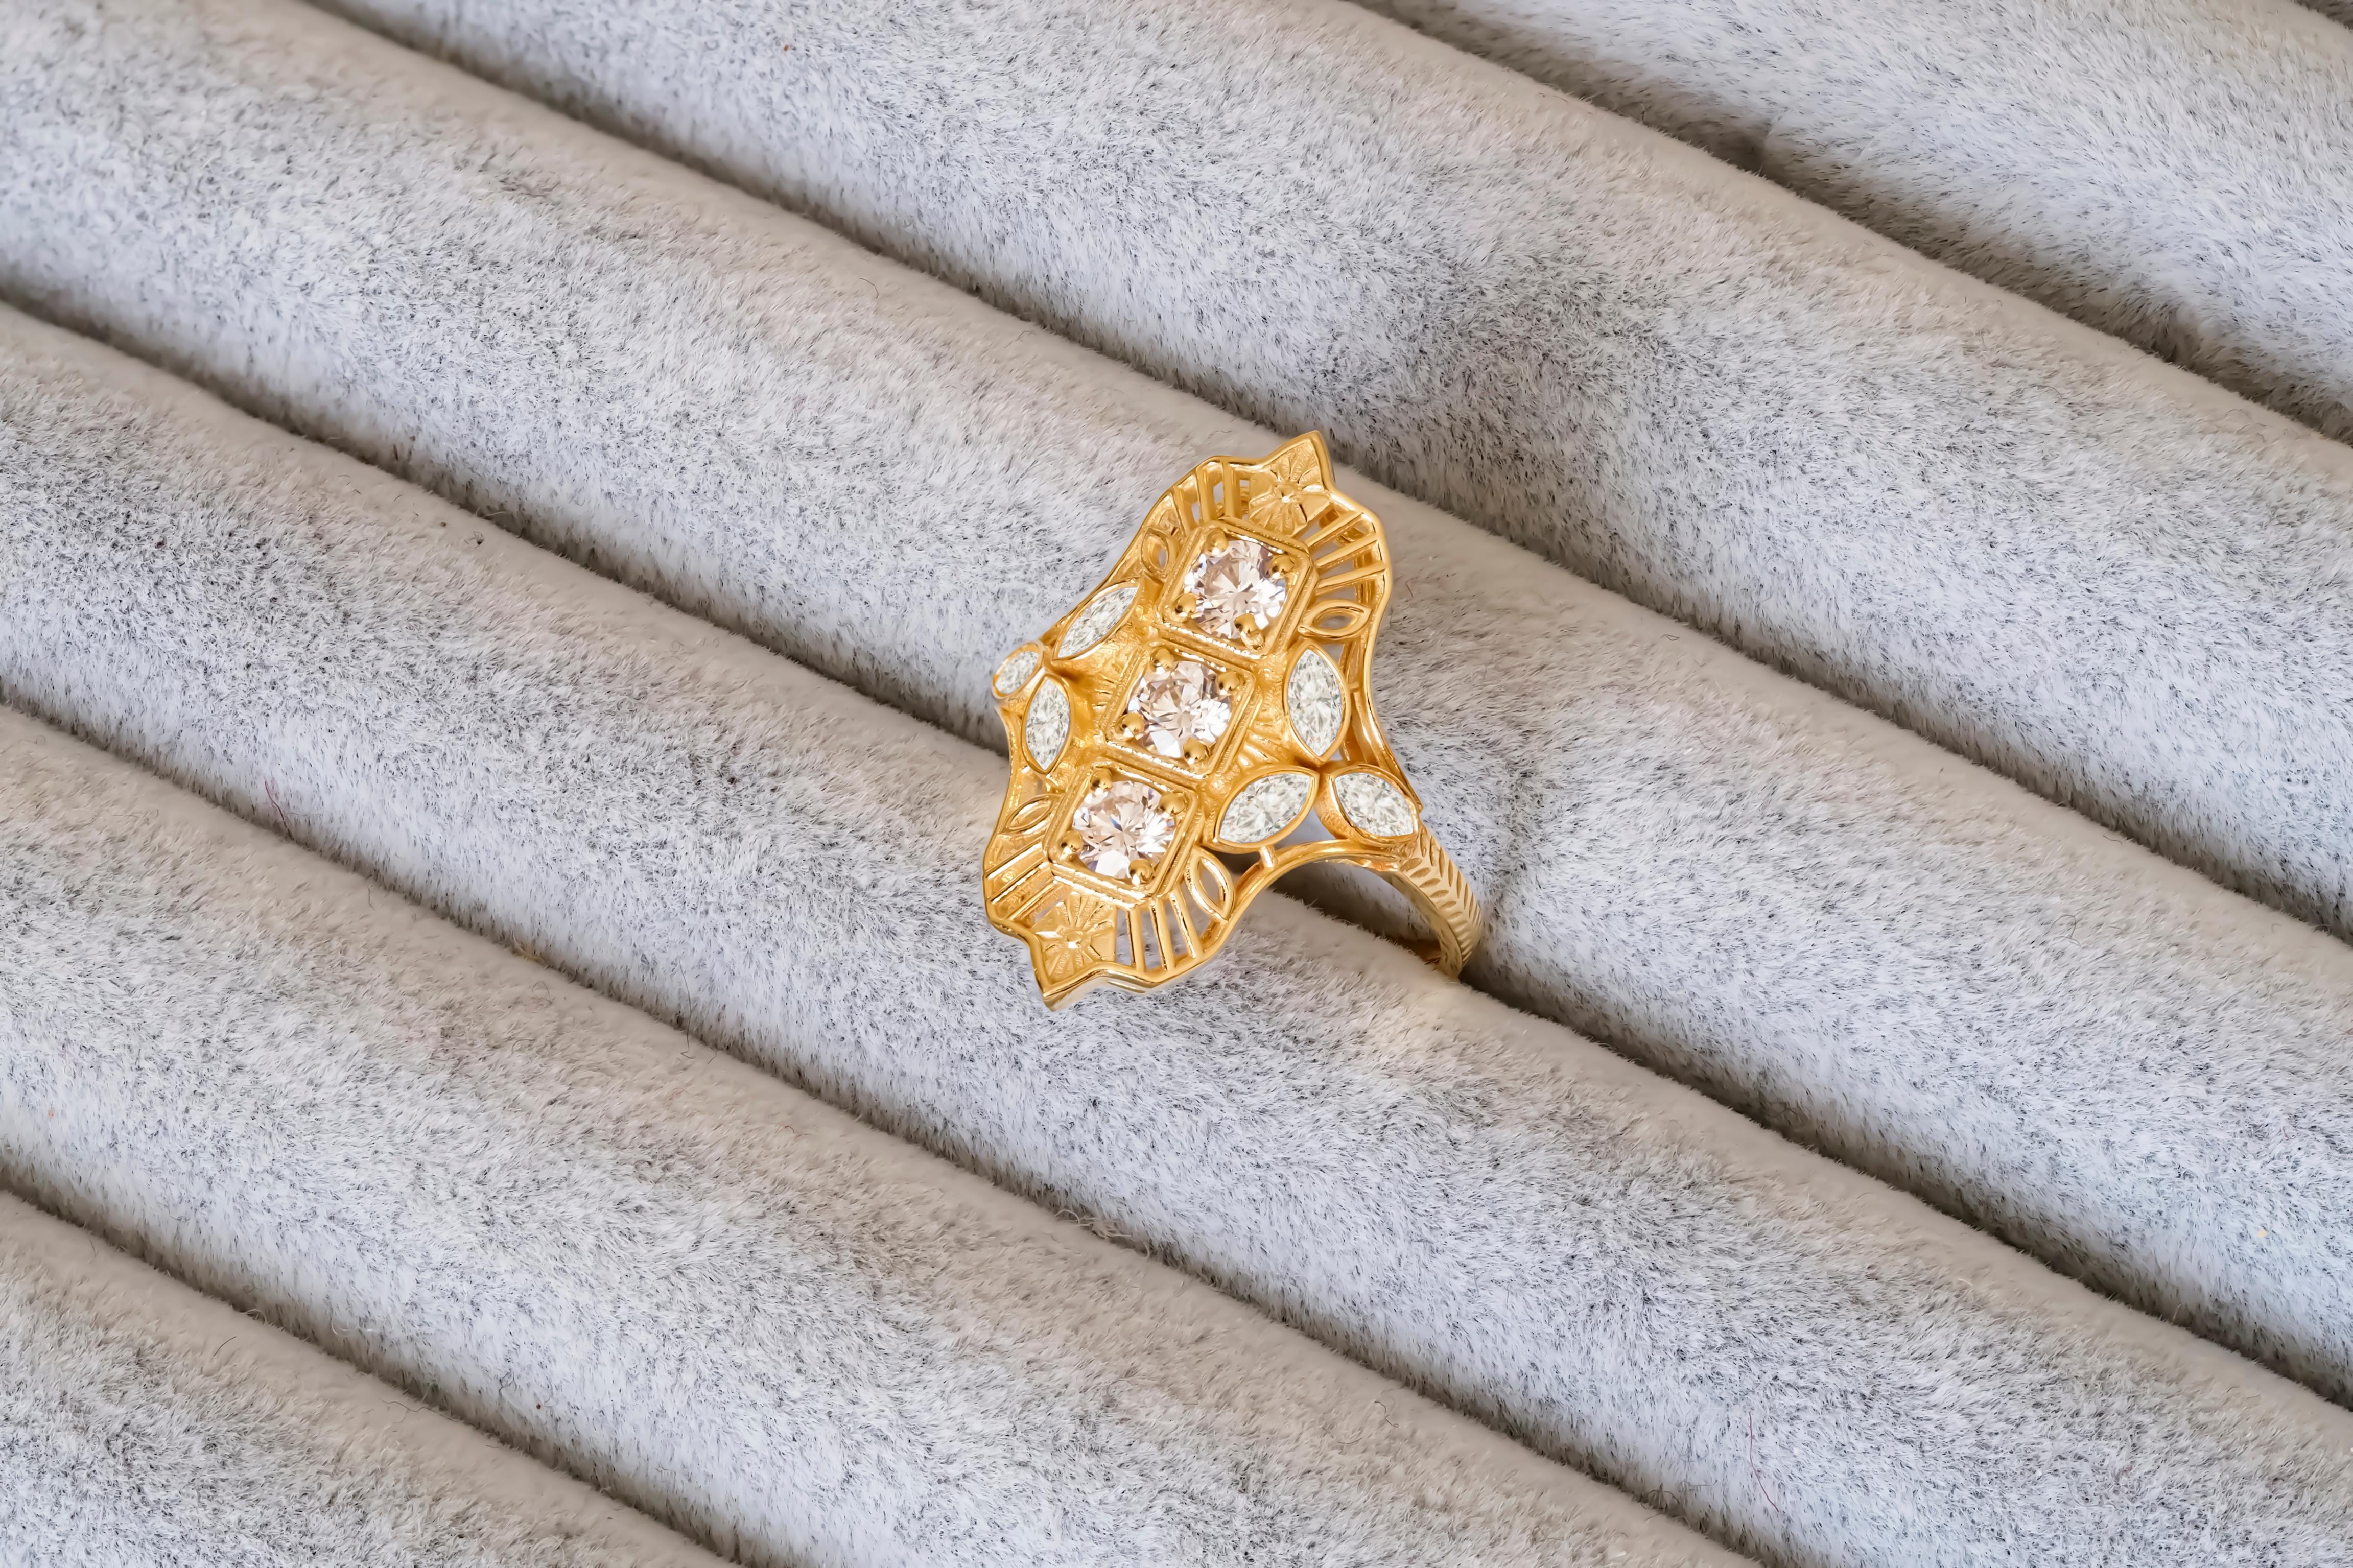 For Sale:  Vintage style moissanite 14k gold engagement ring. 7